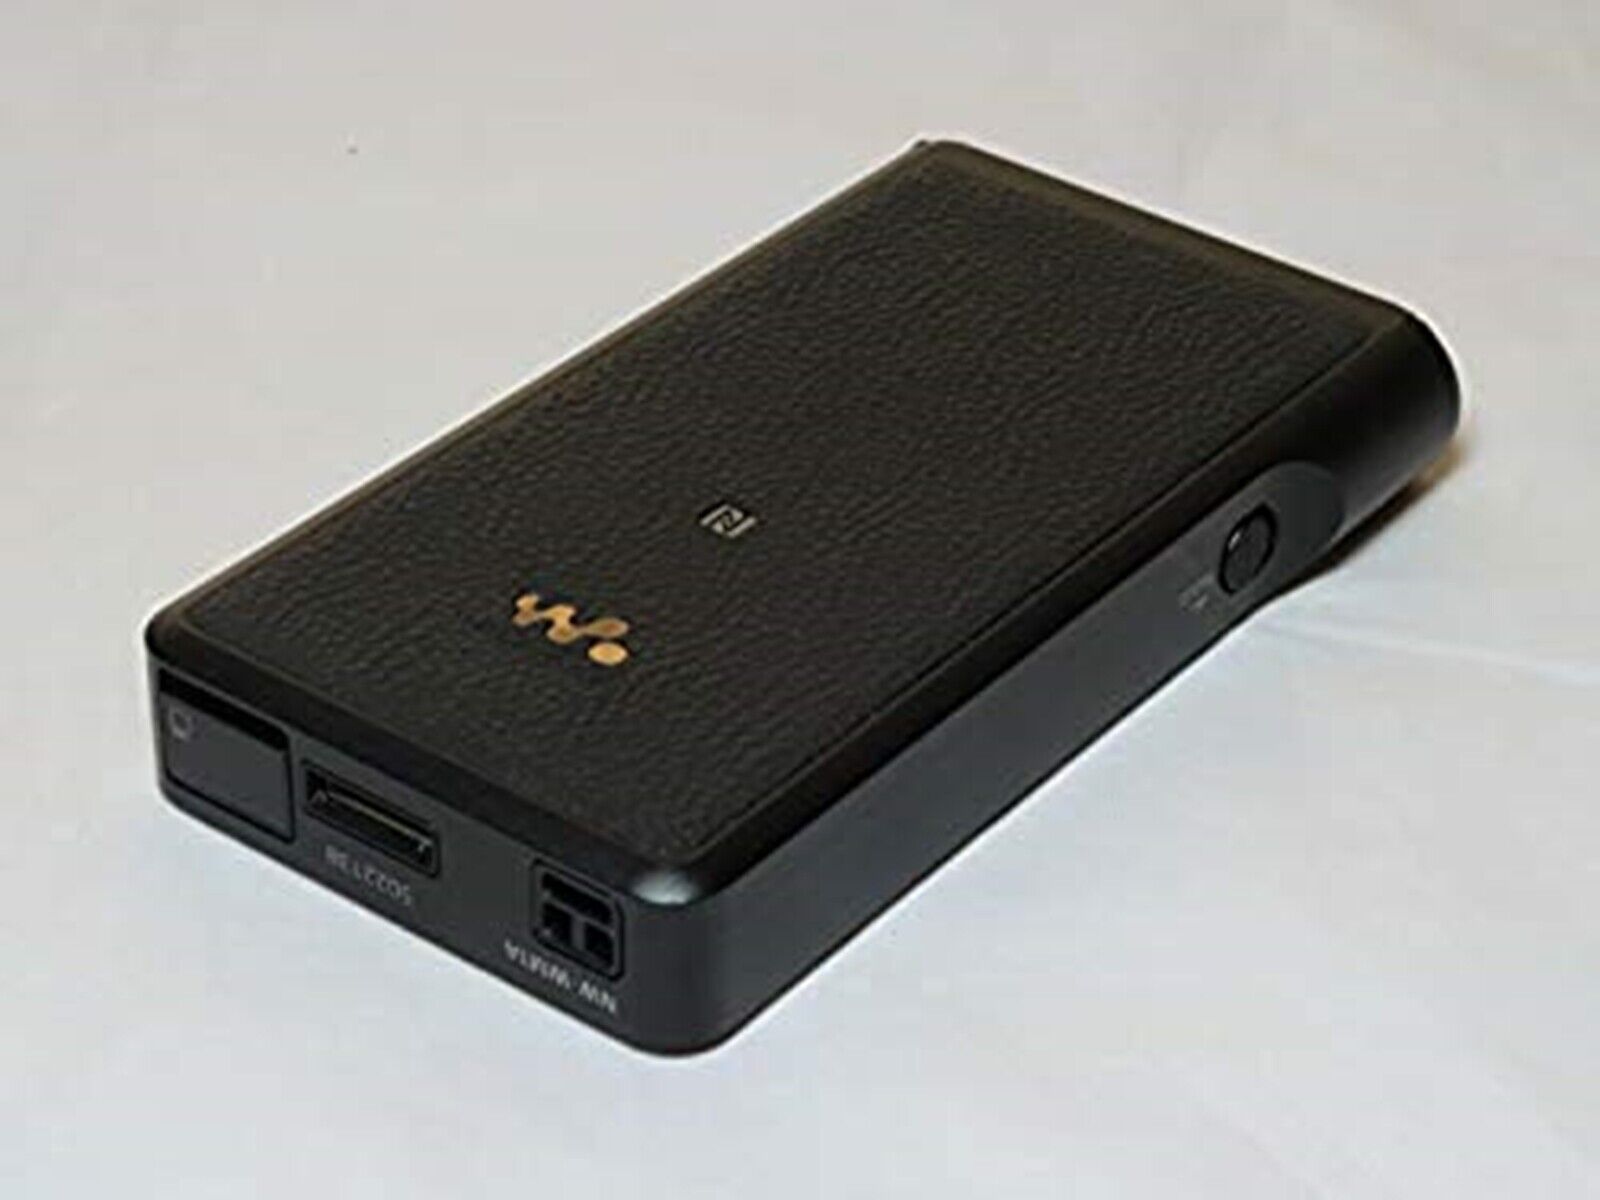 SONY Digital Audio Player Walkman WM1 Series Black NW-WM1A B Original  Packaging